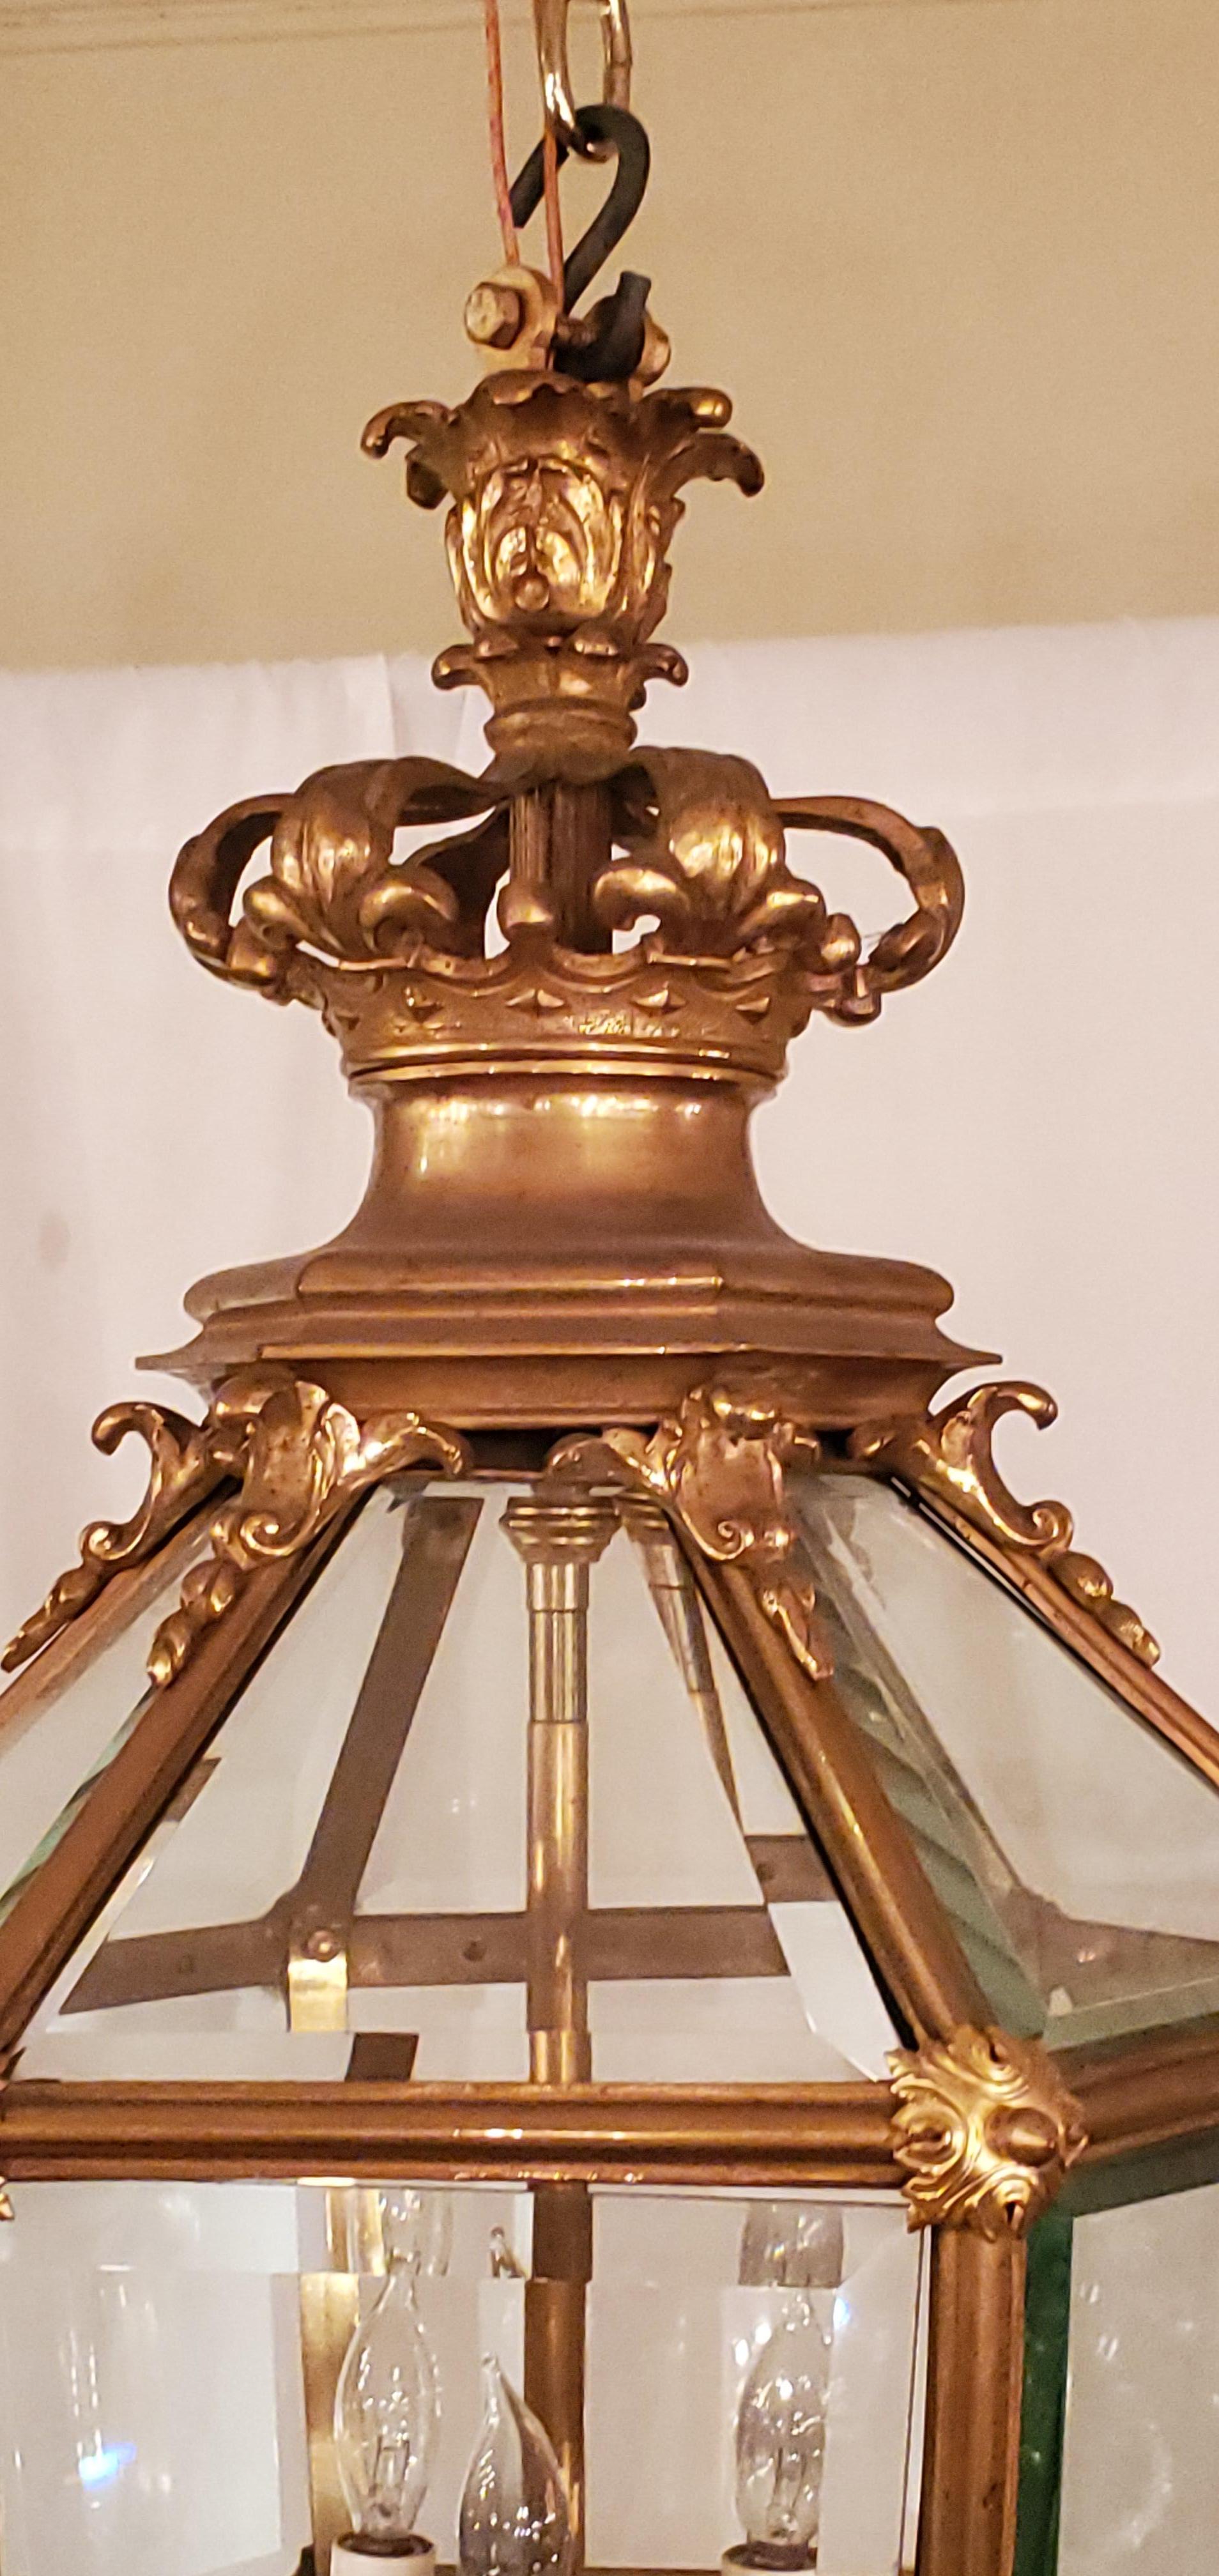 Antique French bronze D'ore Chateau lantern.